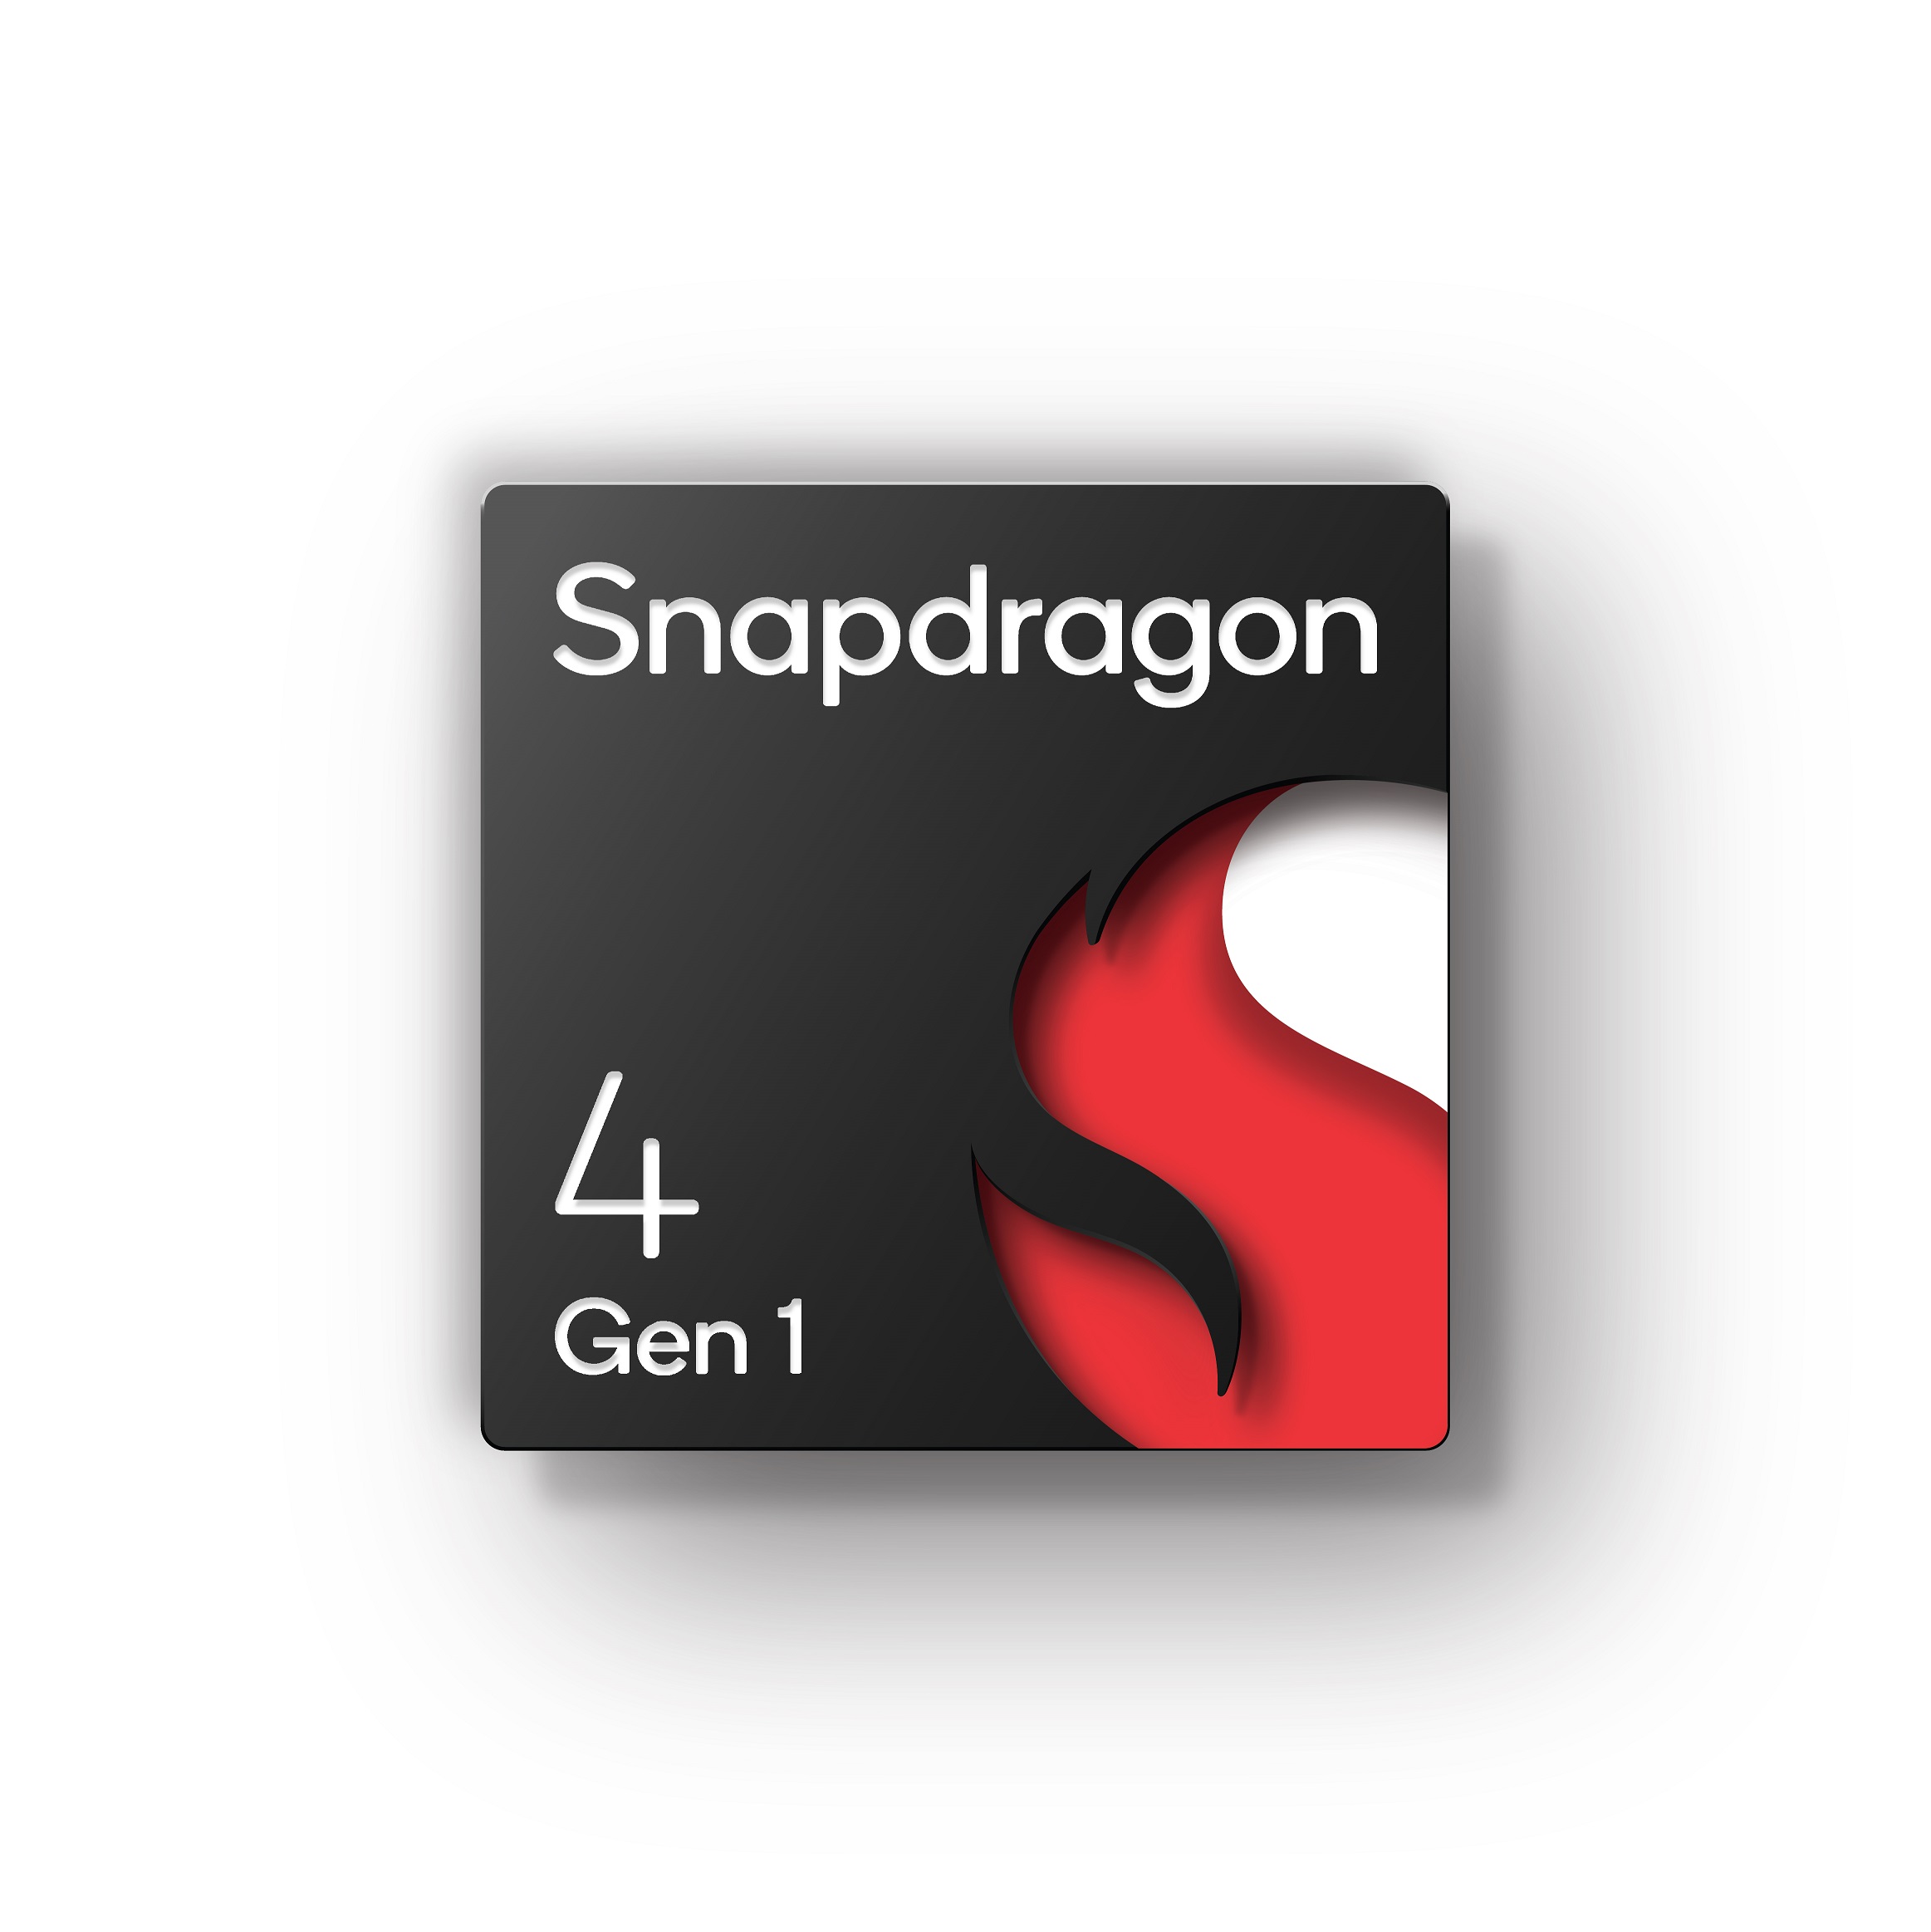 Snapdragon 4 Gen 1